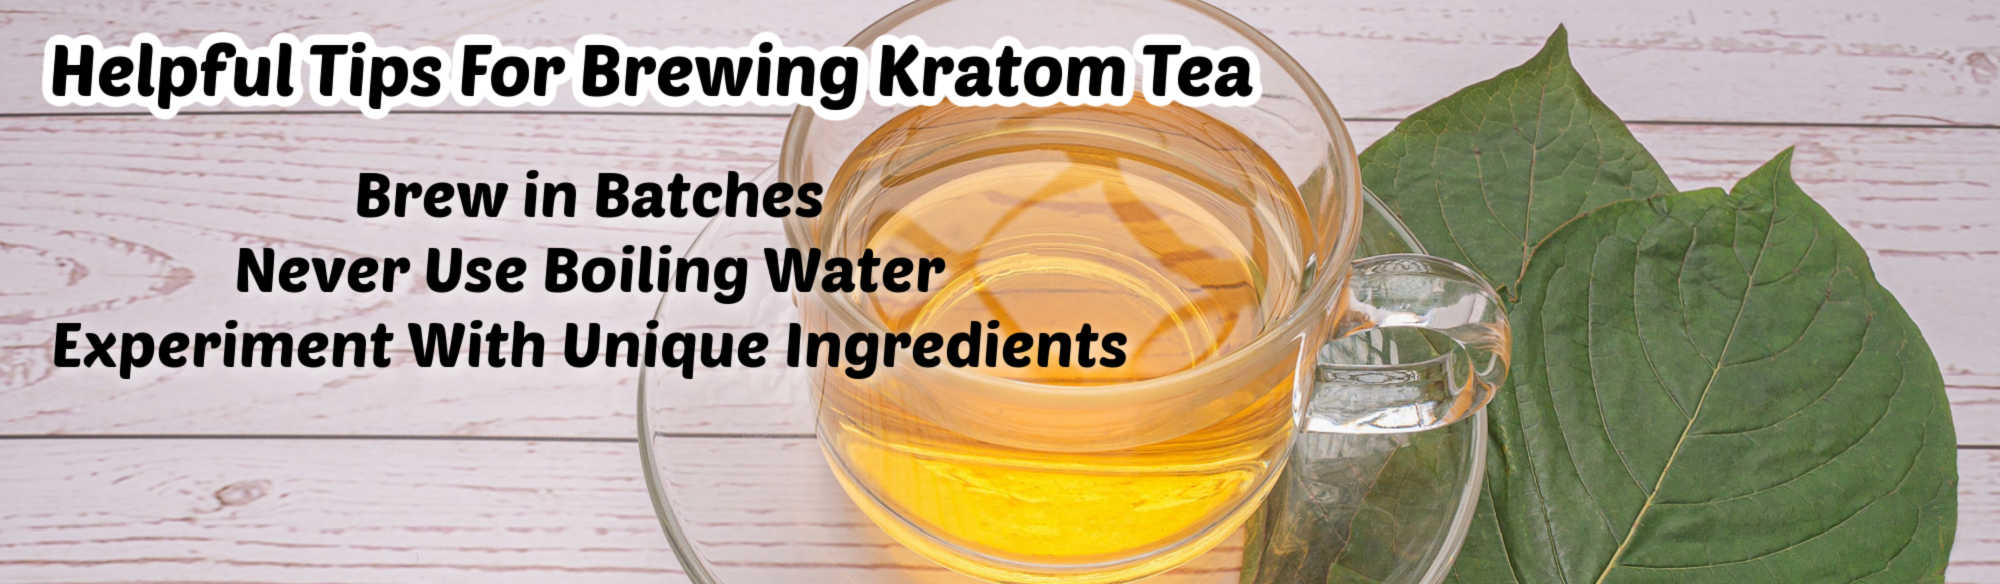 image of tips for brewing kratom tea